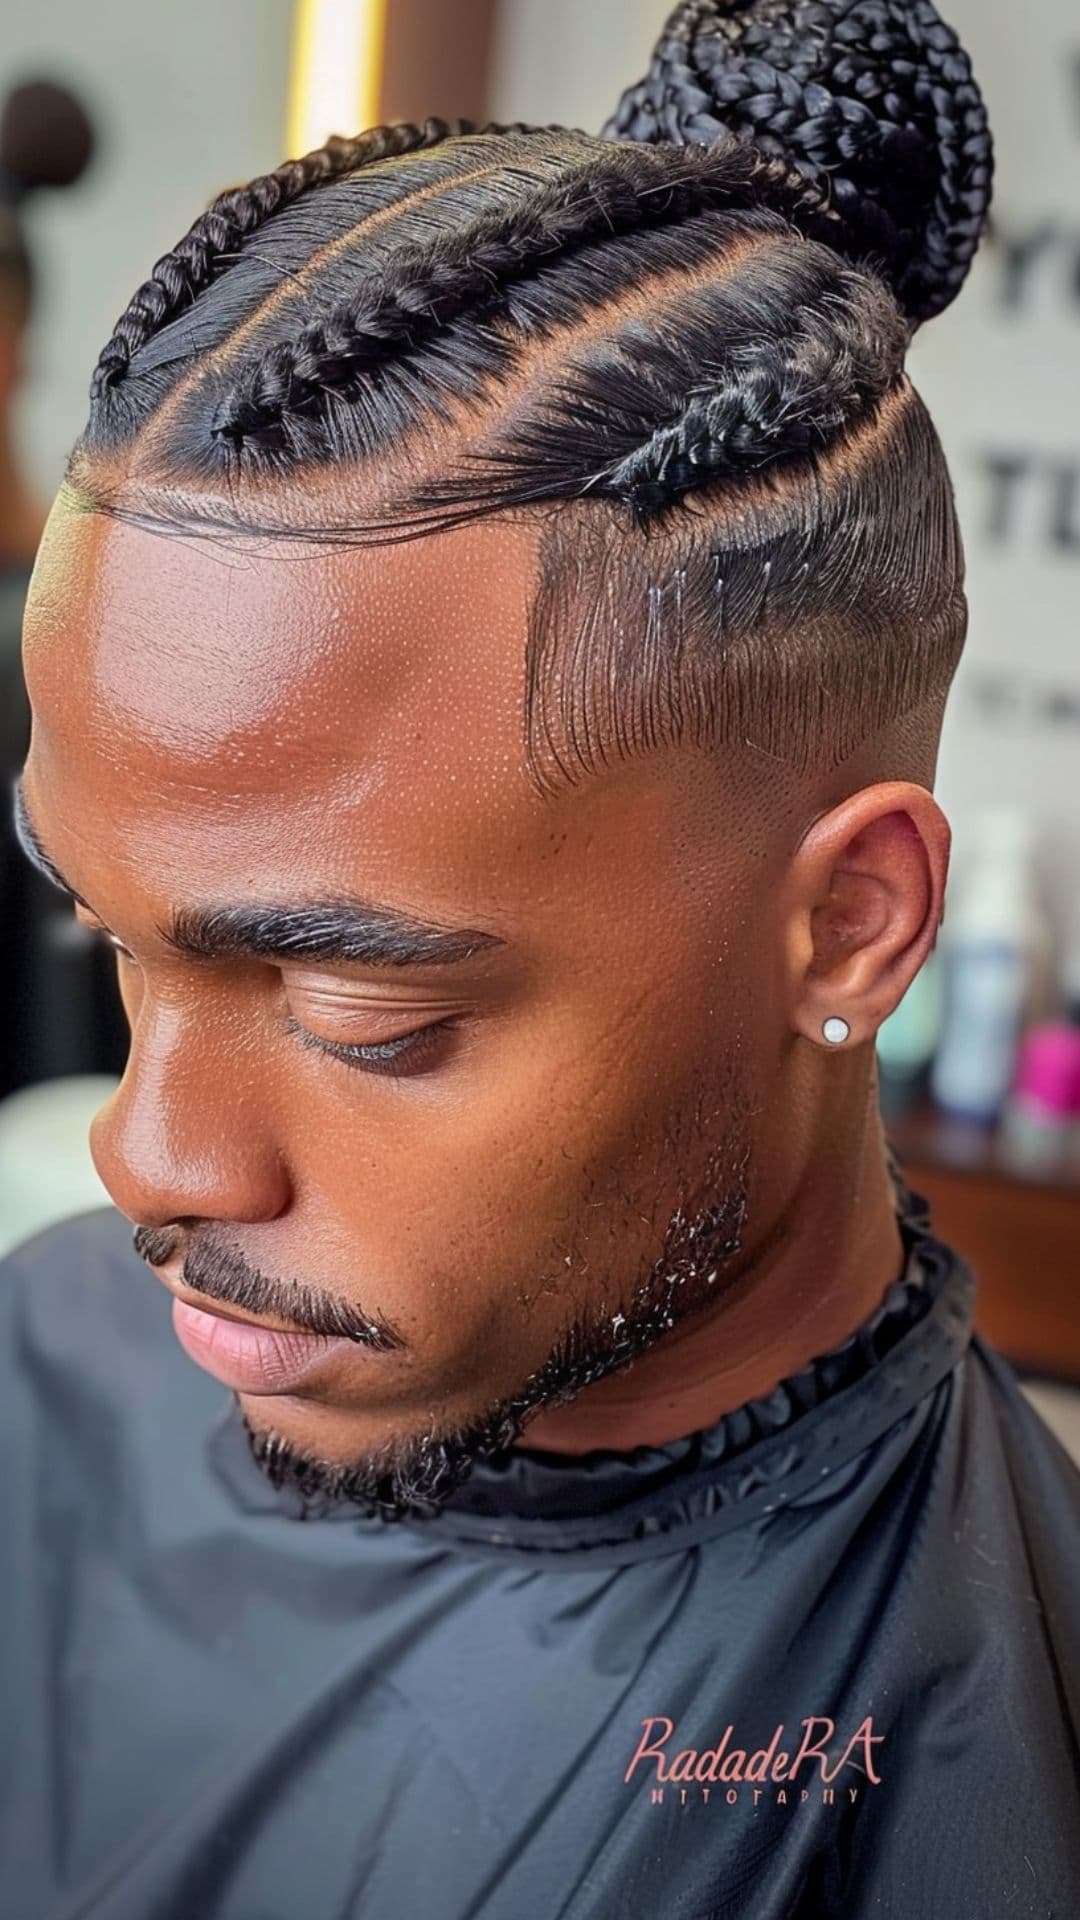 A black man modelling a braided bun hairstyle.